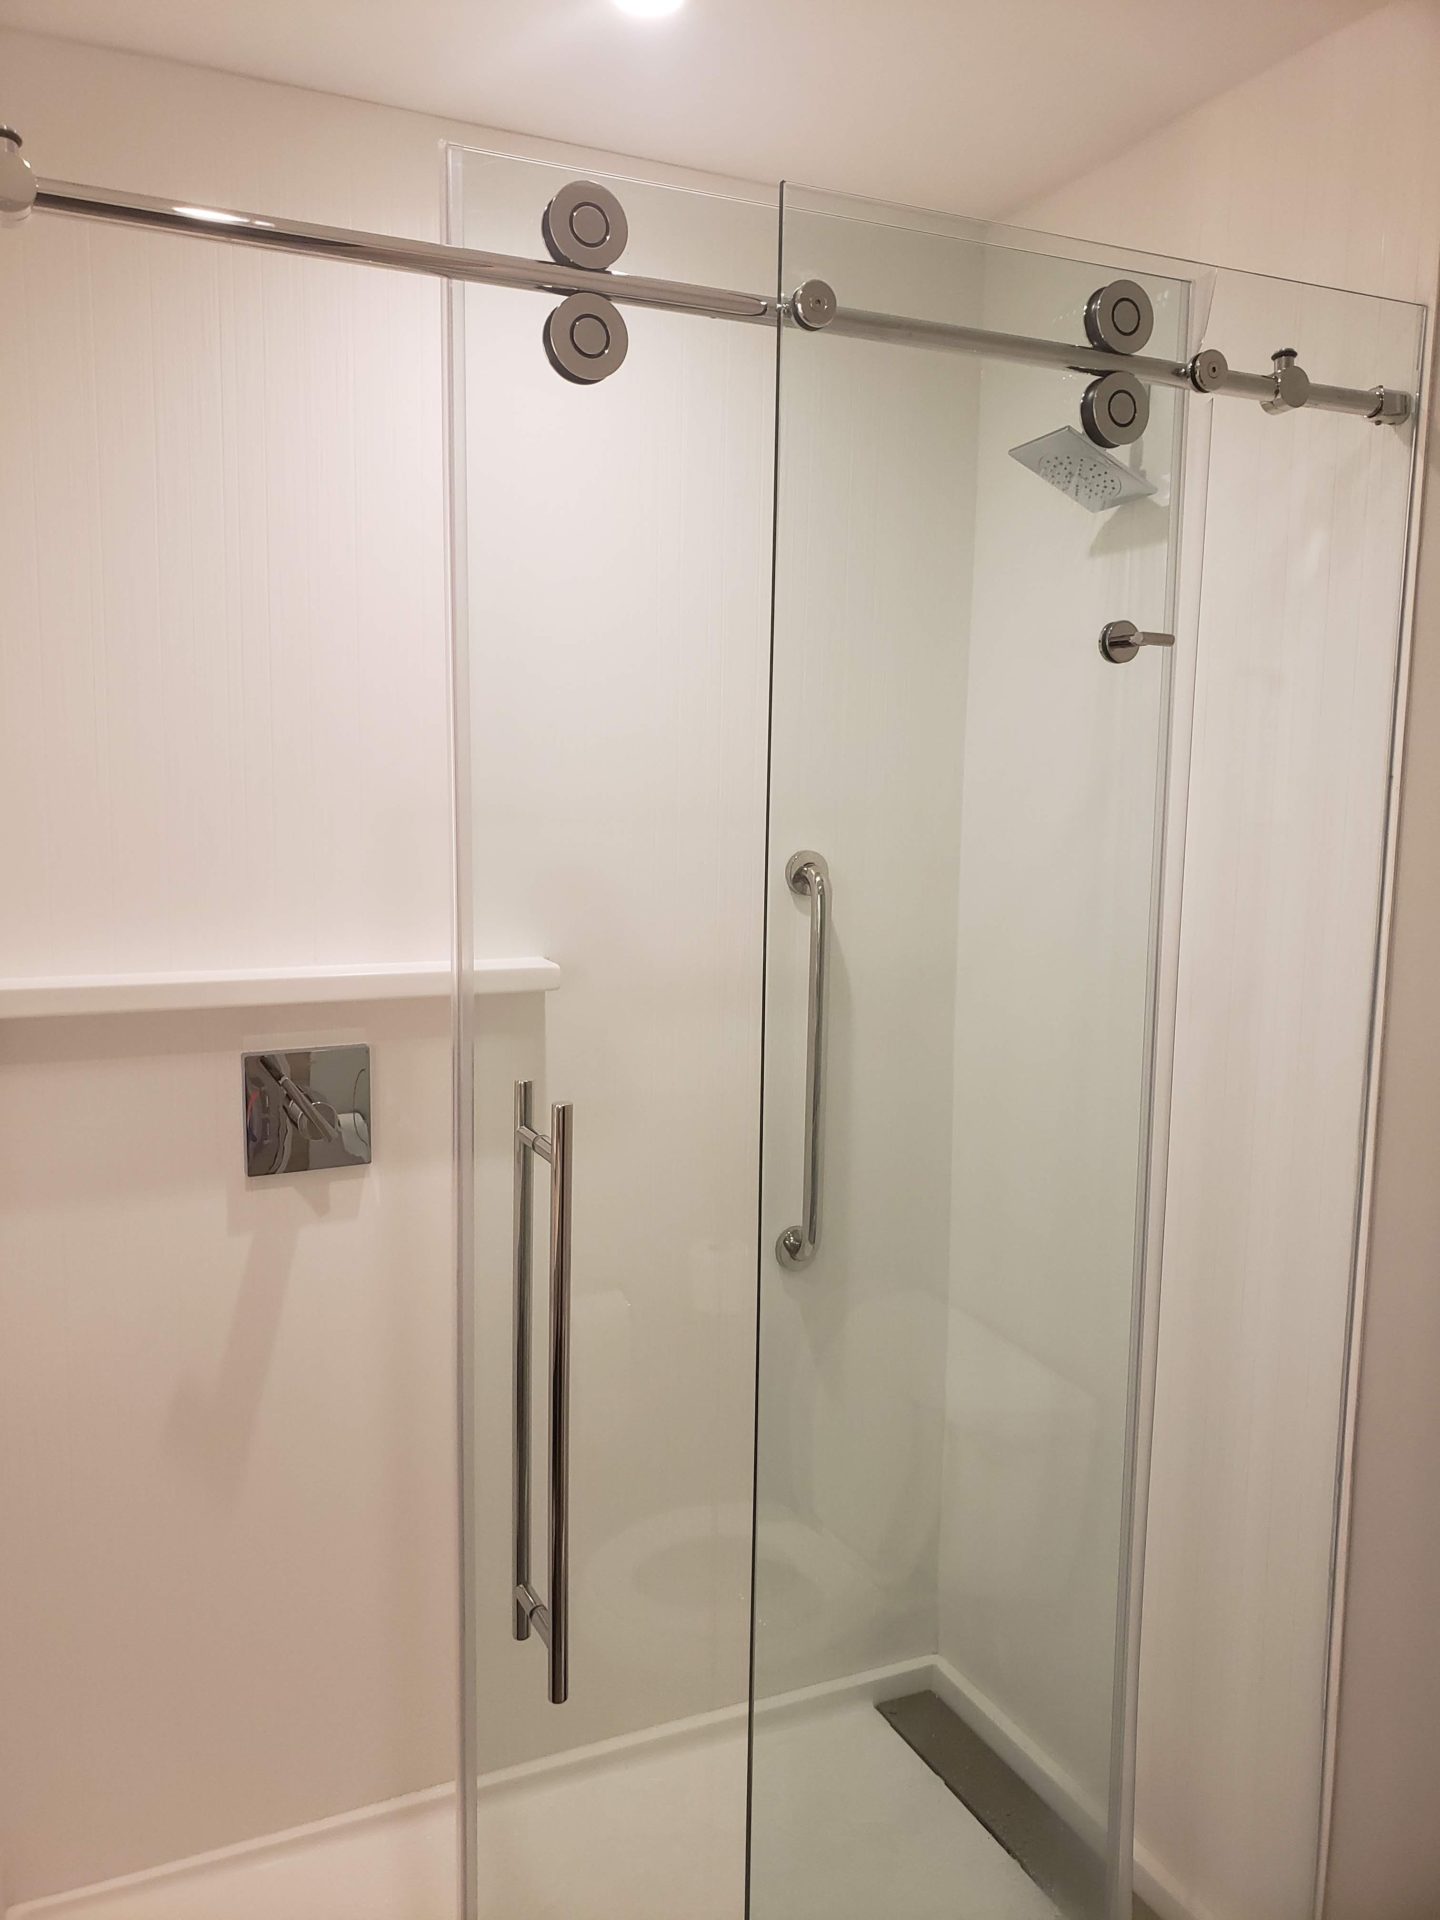 a glass shower door with a shower head